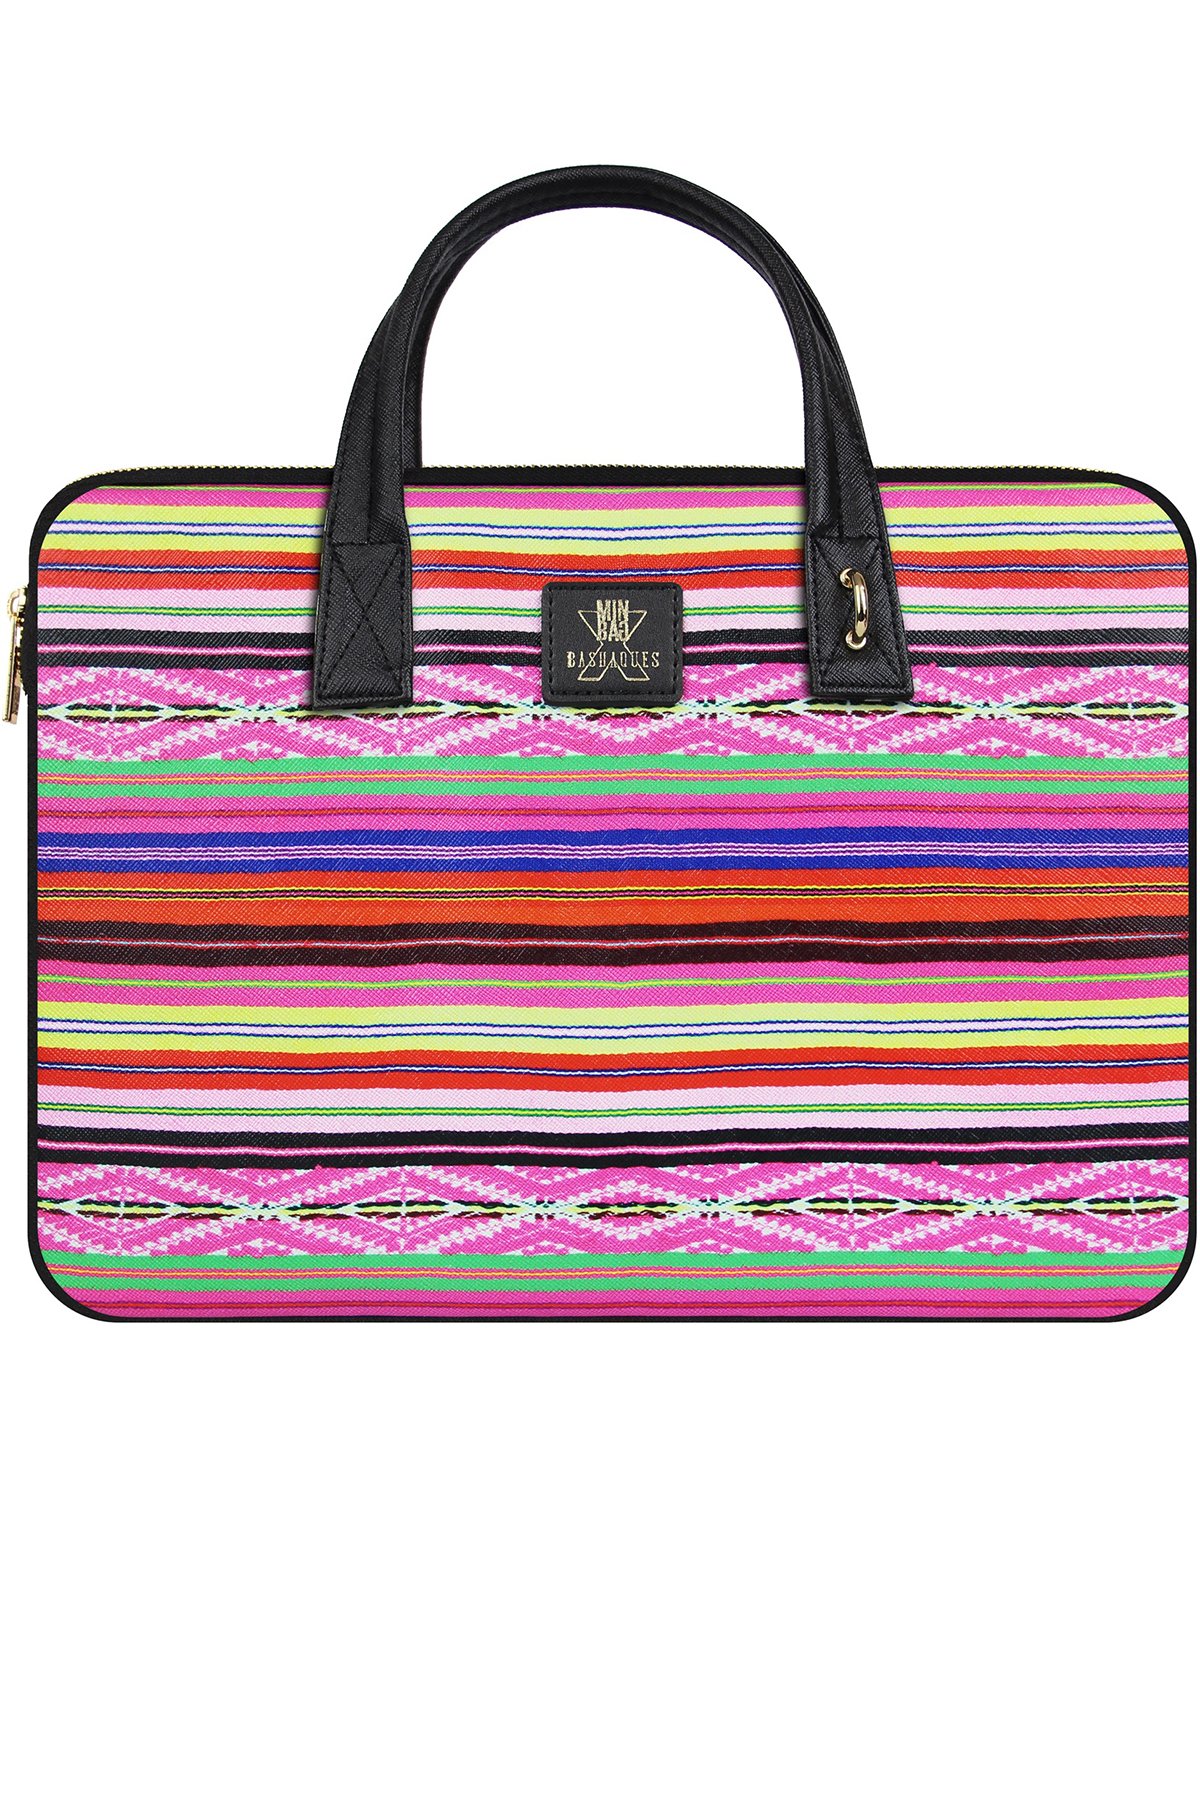 Bashaques x Minbag Laptop Bag (Peruvian Poncho)